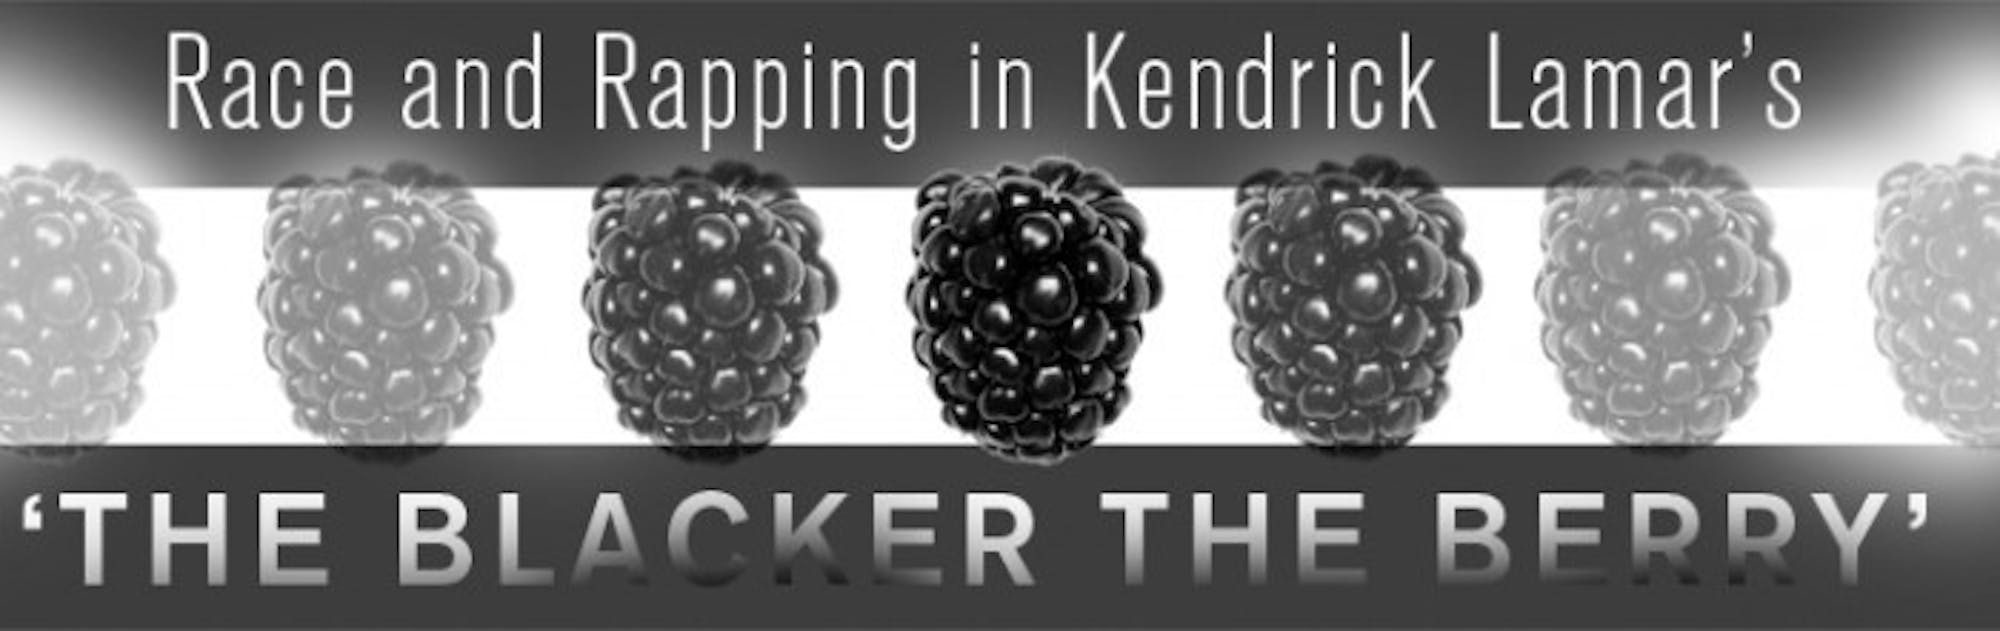 kendrick-graphic-WEB